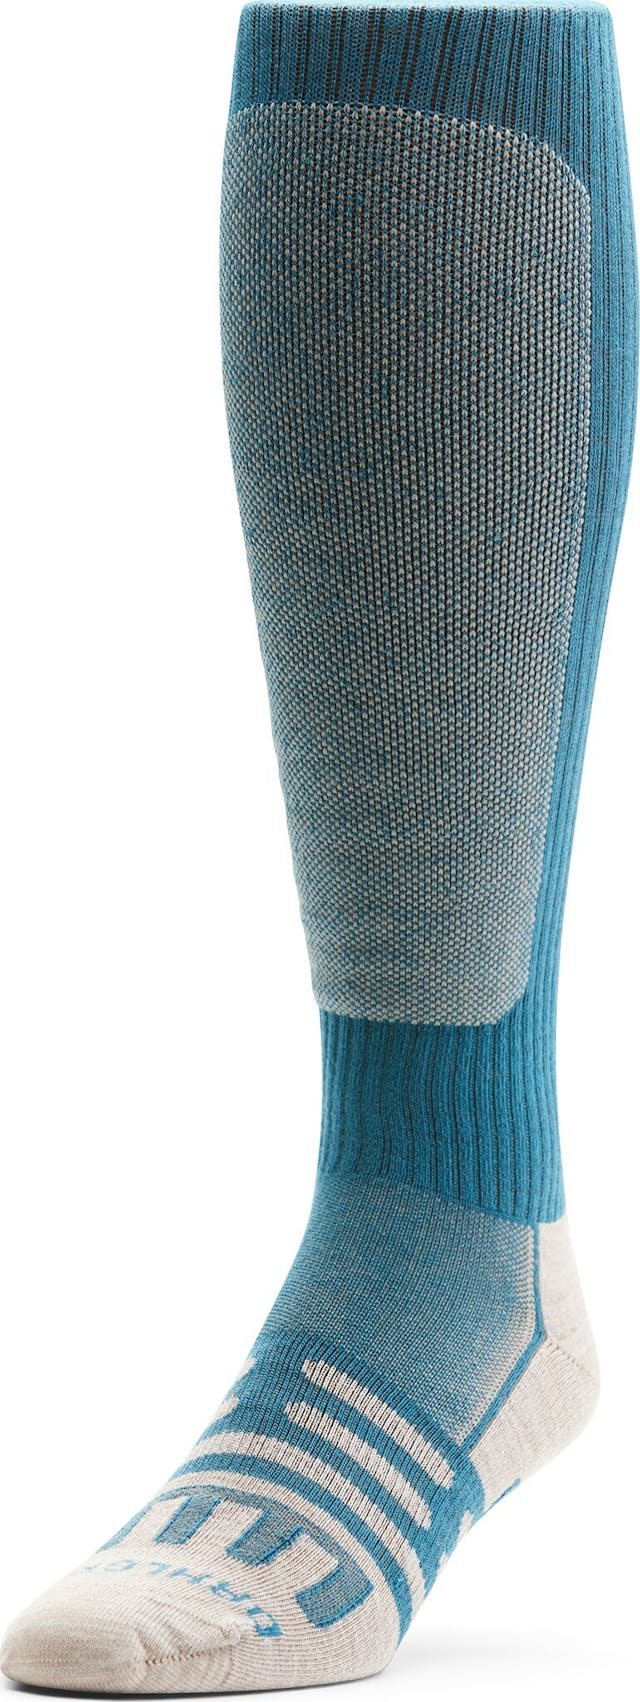 Product image for Slope Light Ski Sock - Unisex